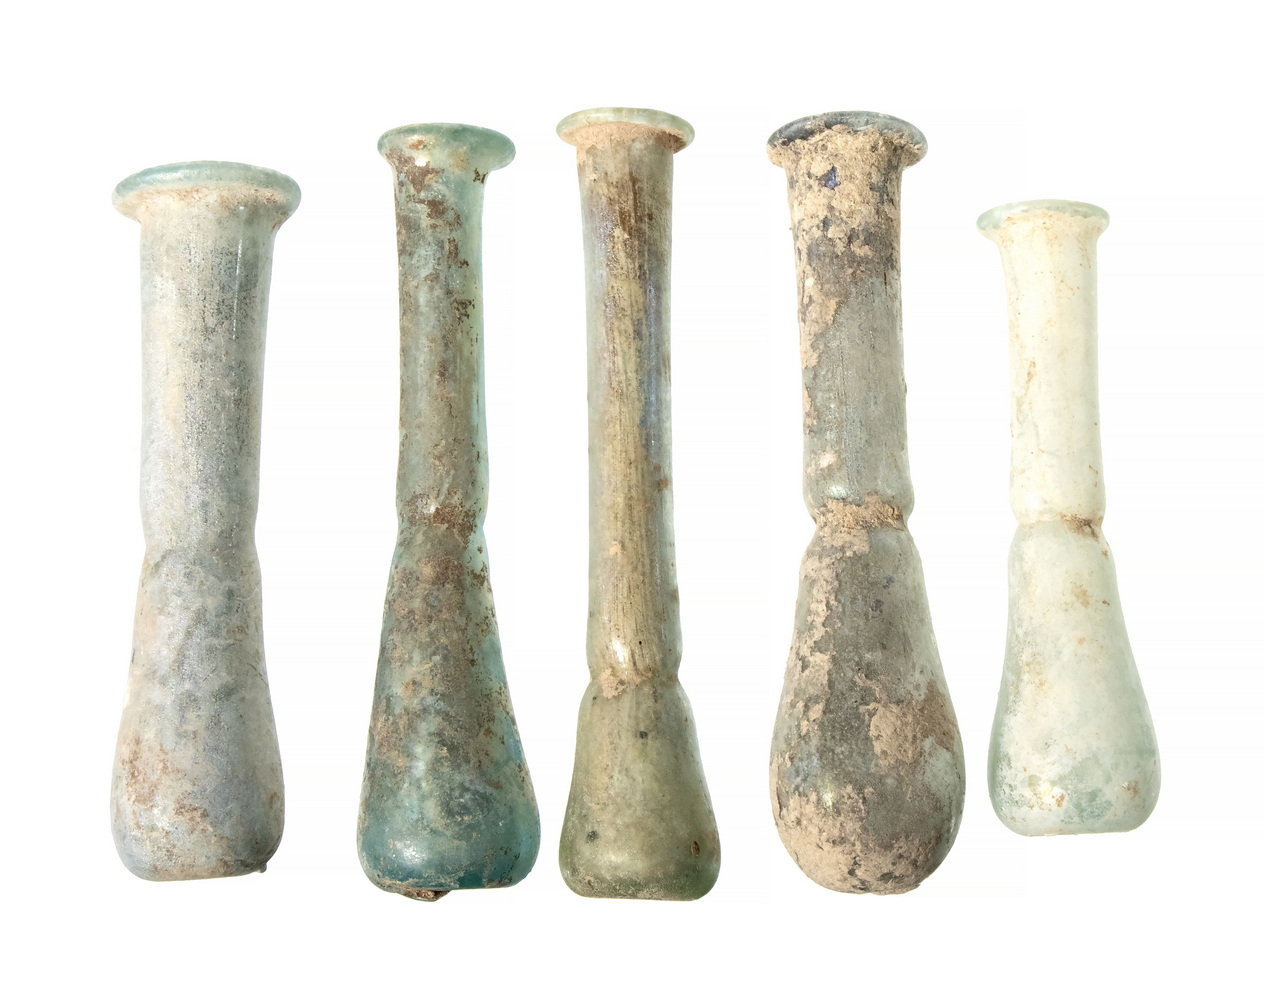  5 ANCIENT ROMAN GLASS BOTTLES 2b1ba9